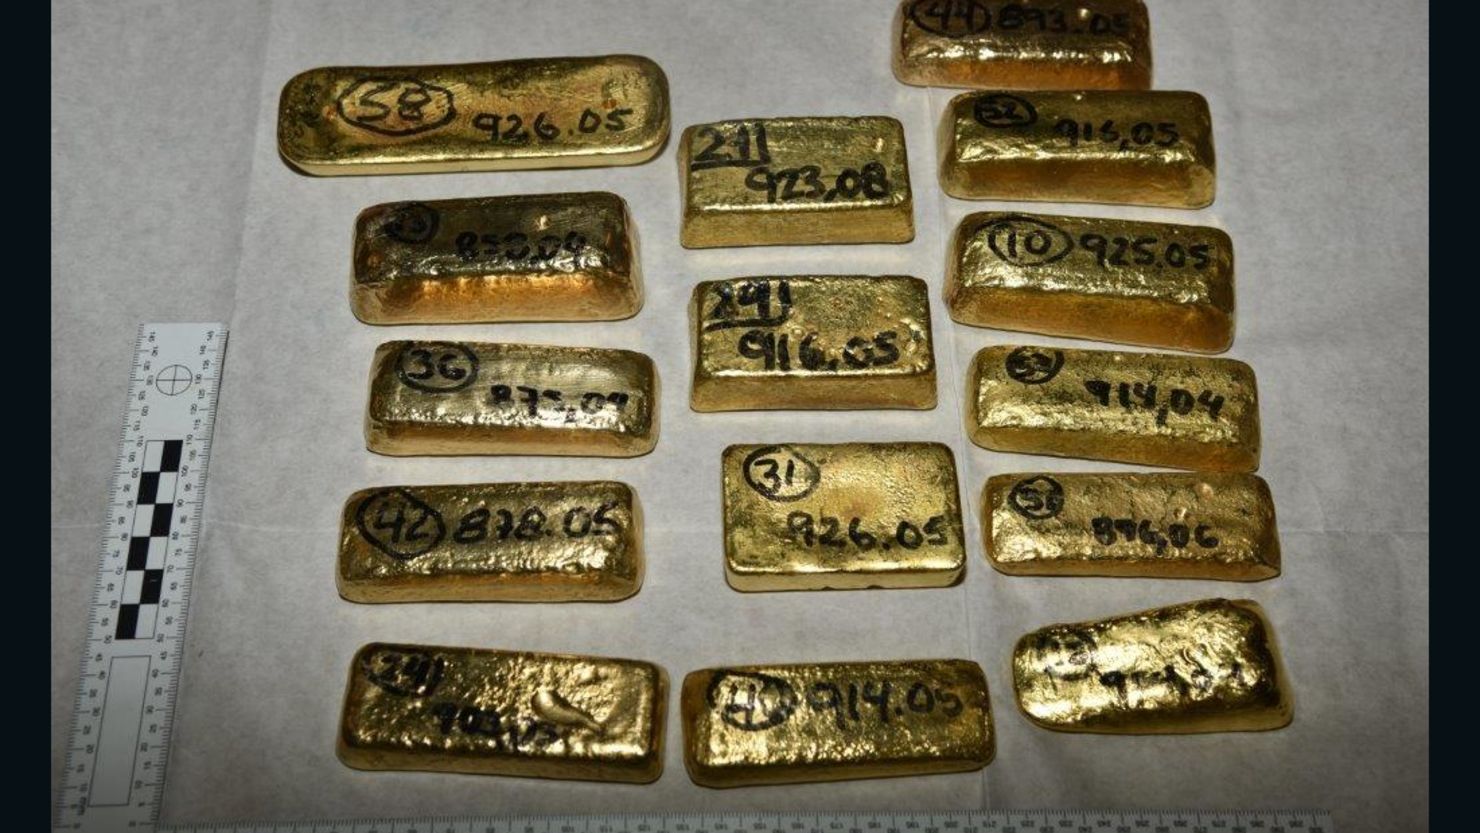 104 kg of gold was seized at London's Heathrow Airport, worth around $5 million.